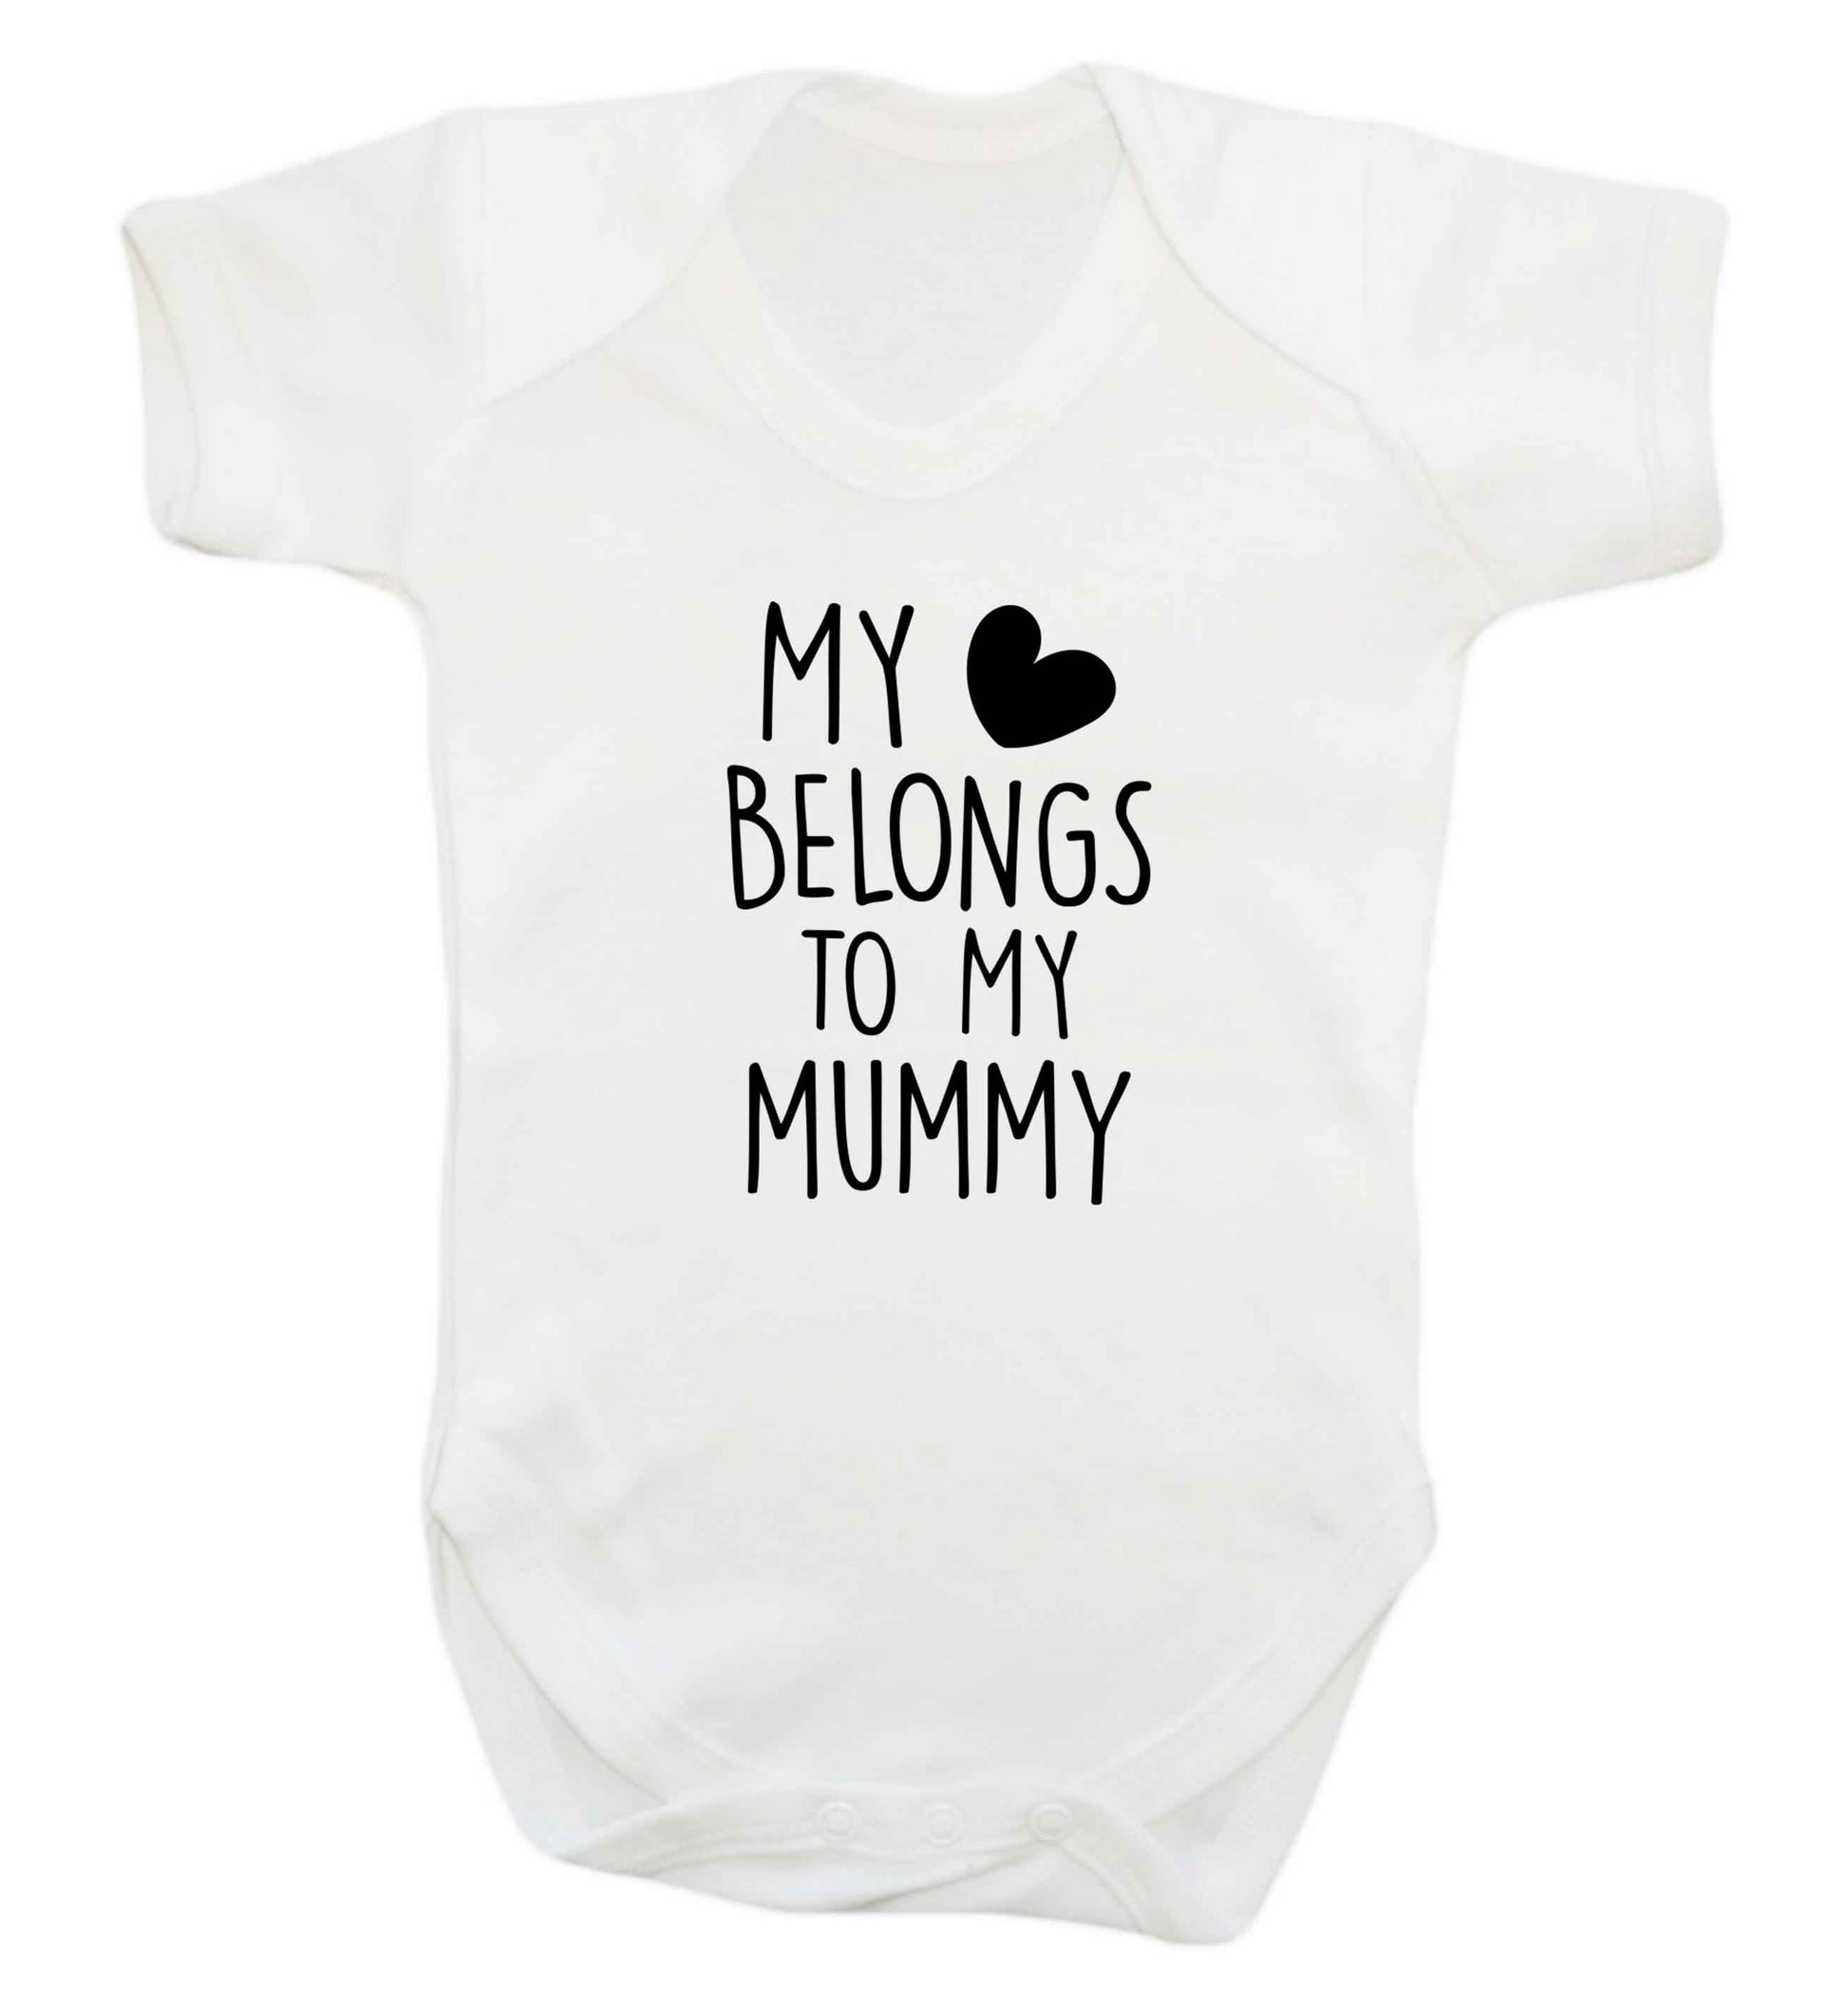 My heart belongs to my mummy baby vest white 18-24 months